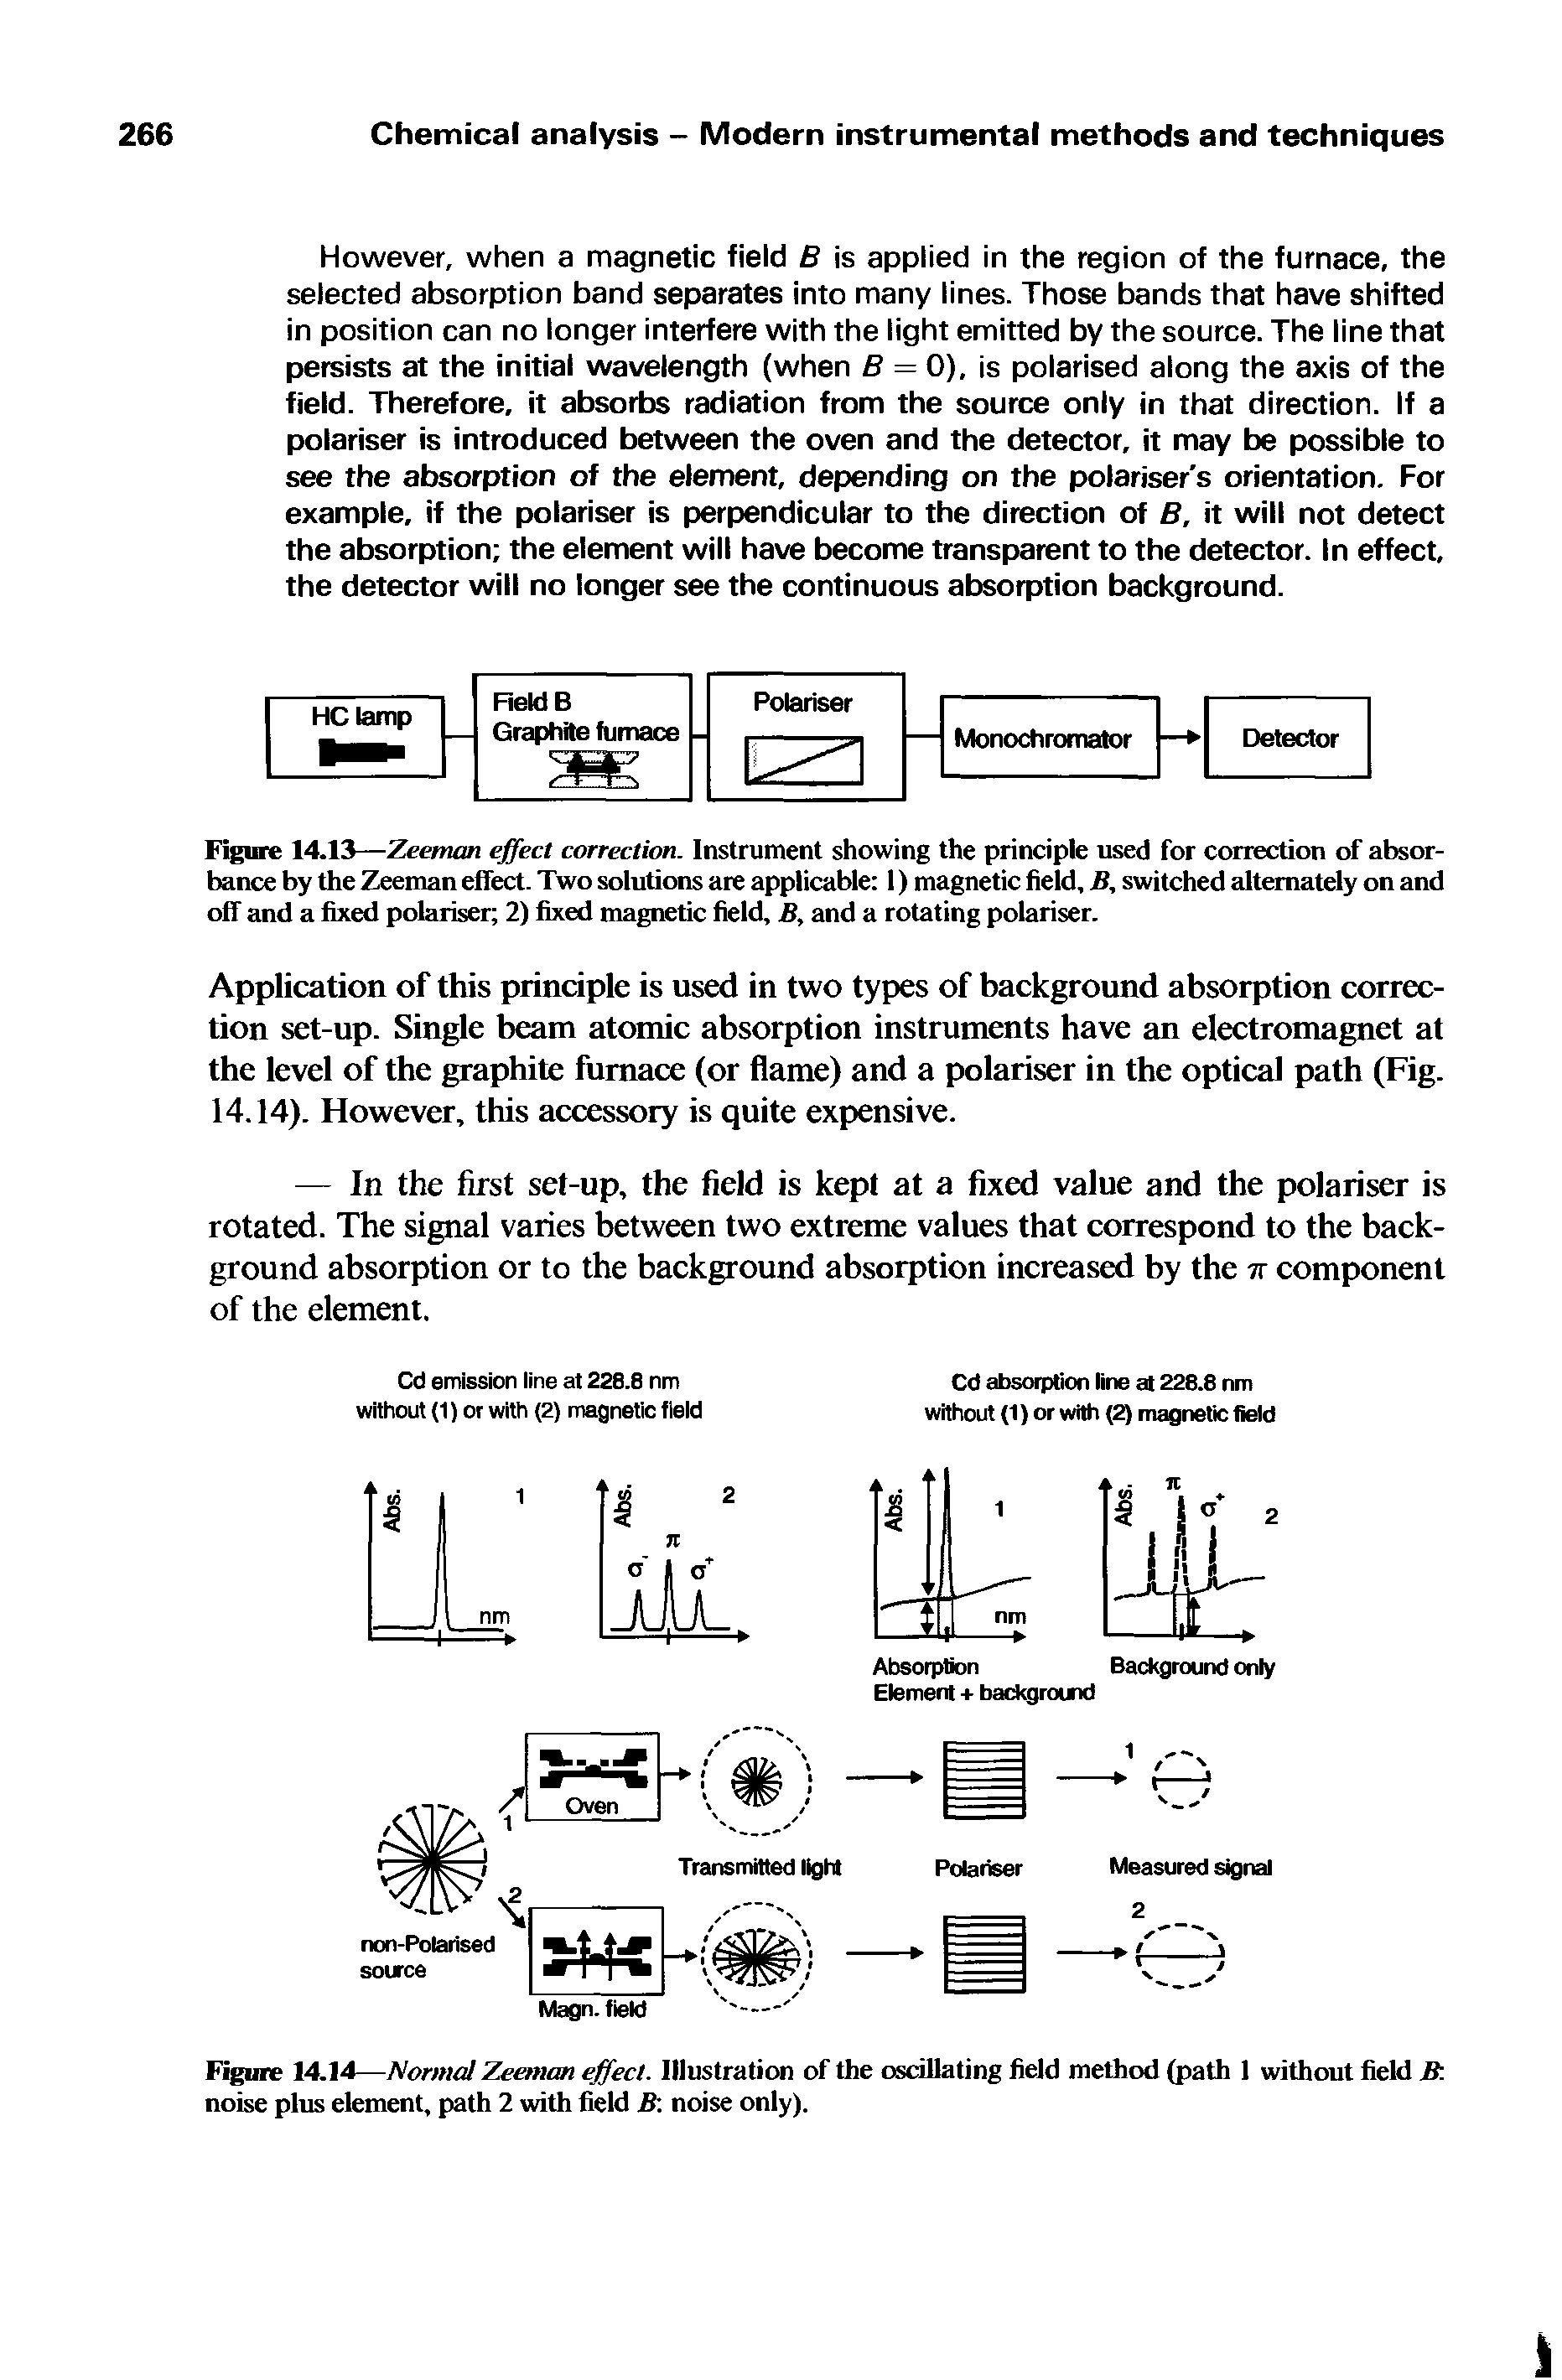 Figure 14.14—Normal Zeeman effect. Illustration of the oscillating field method (path 1 without field B noise plus element, path 2 with field B noise only).